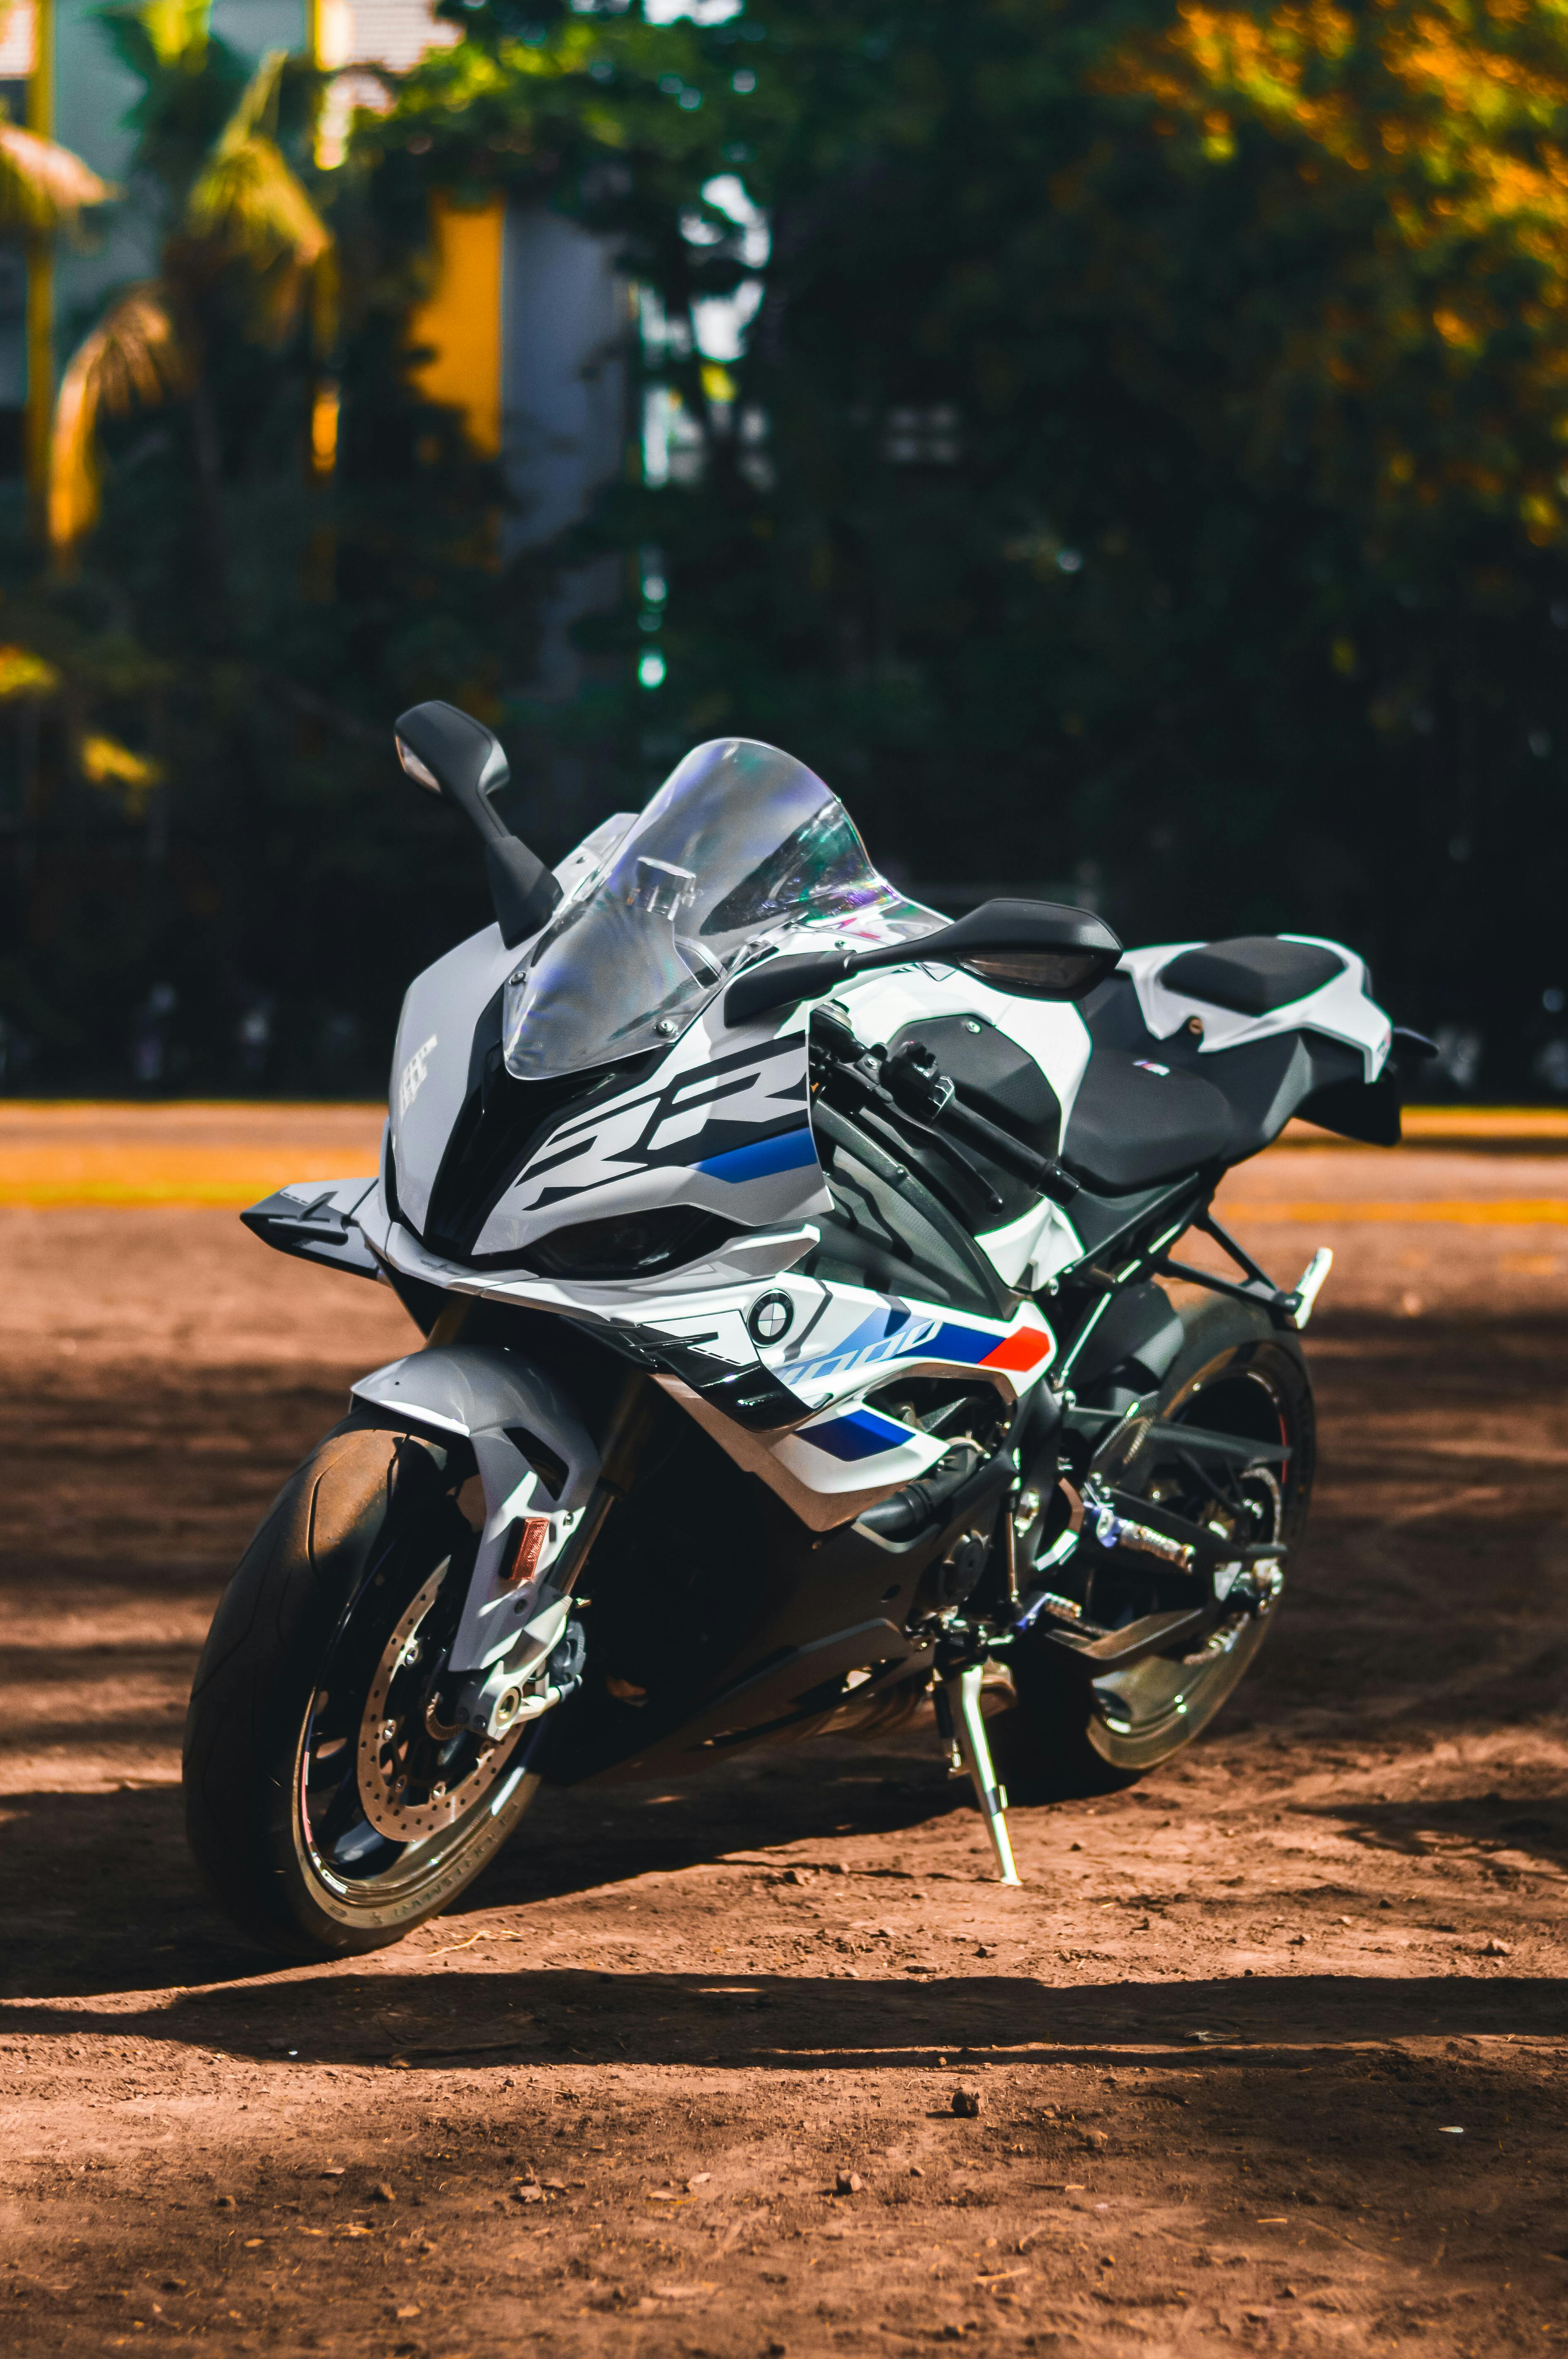 Wallpaper : superbike, Kawasaki Ninja H2R, reflection, motorcycle 2560x1440  - Droudrou - 2214484 - HD Wallpapers - WallHere